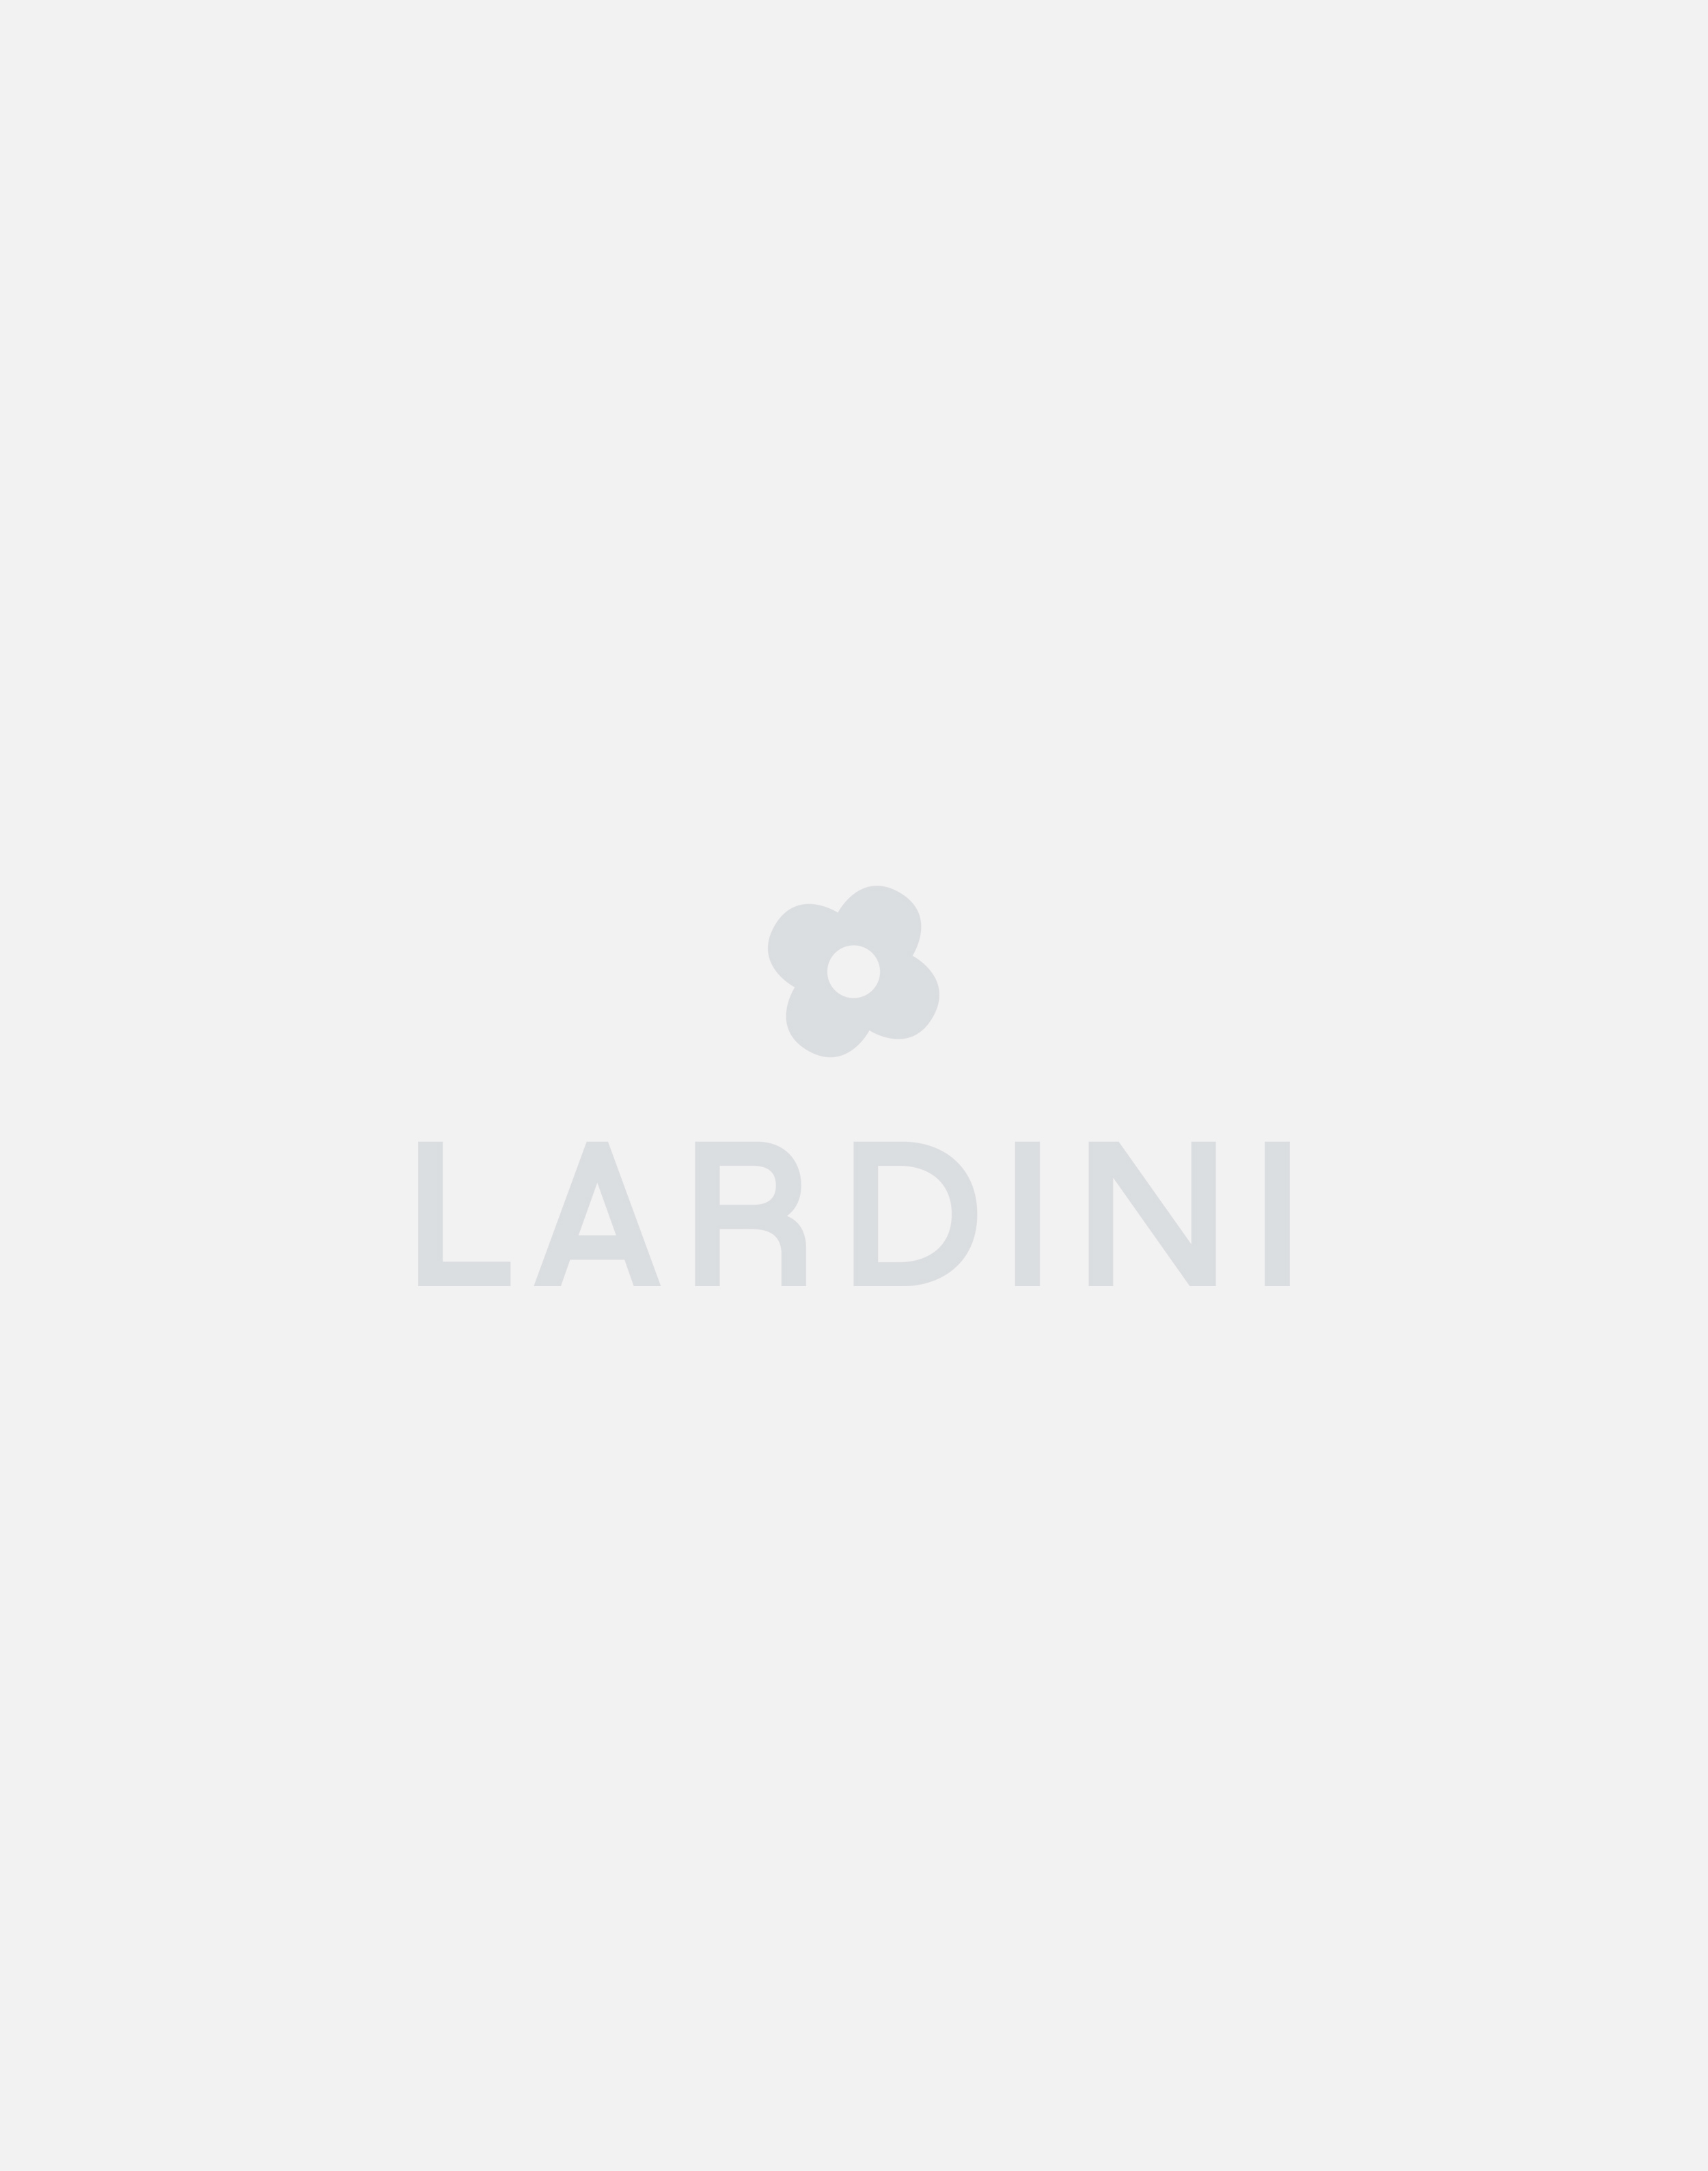 Grey trousers - Luigi Lardini capsule 4